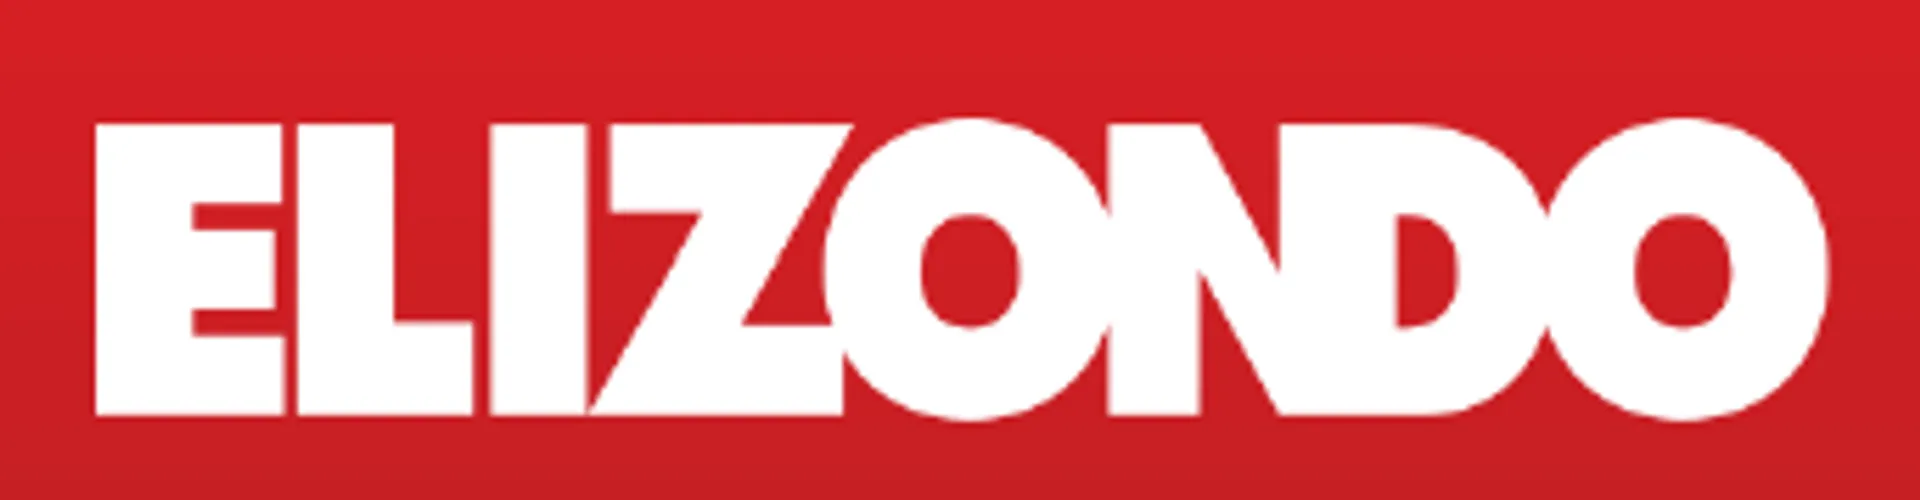 ELIZONDO logo de catálogo